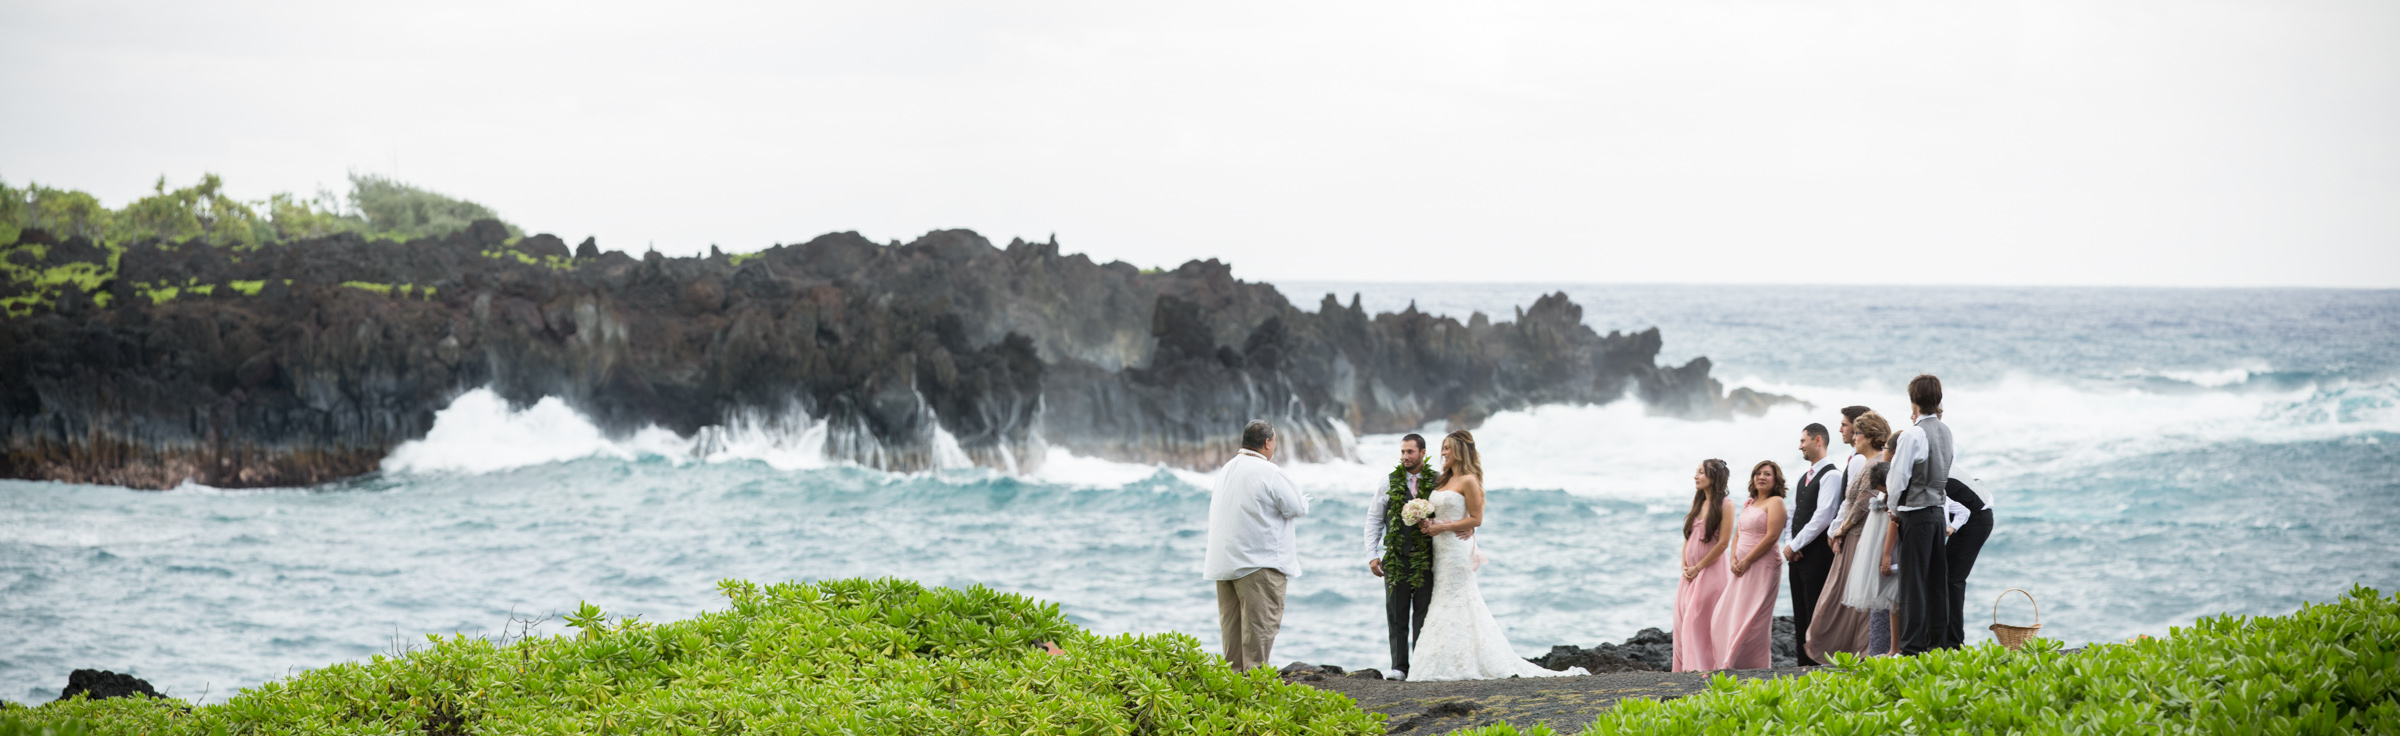 A photograph of a wedding taking place set against a dramatic coastline in Hana Maui.